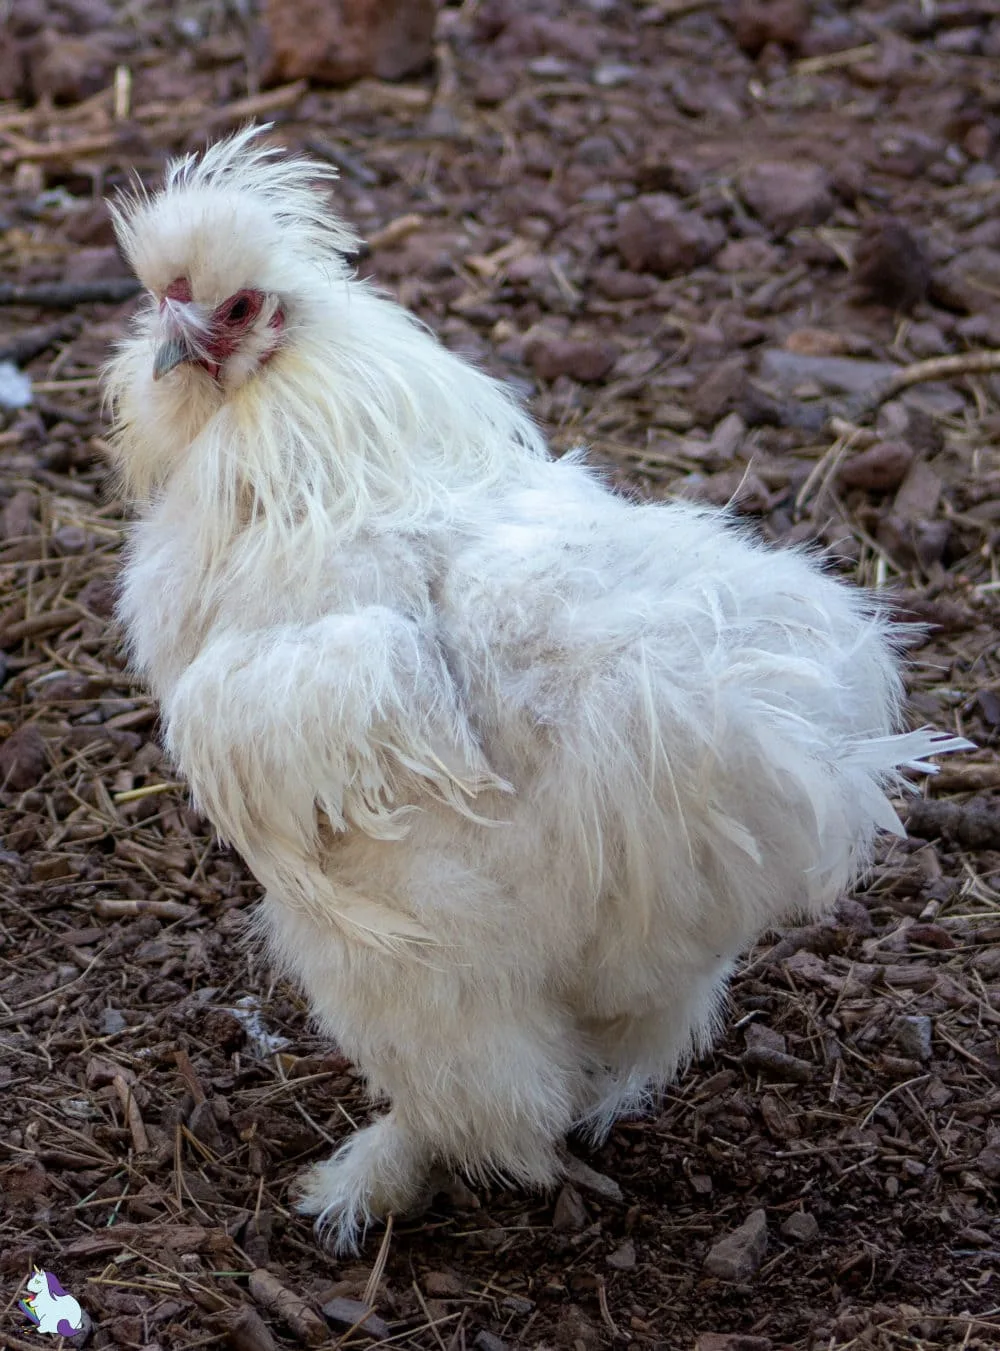 Elvis, the chicken, at Bearizona.